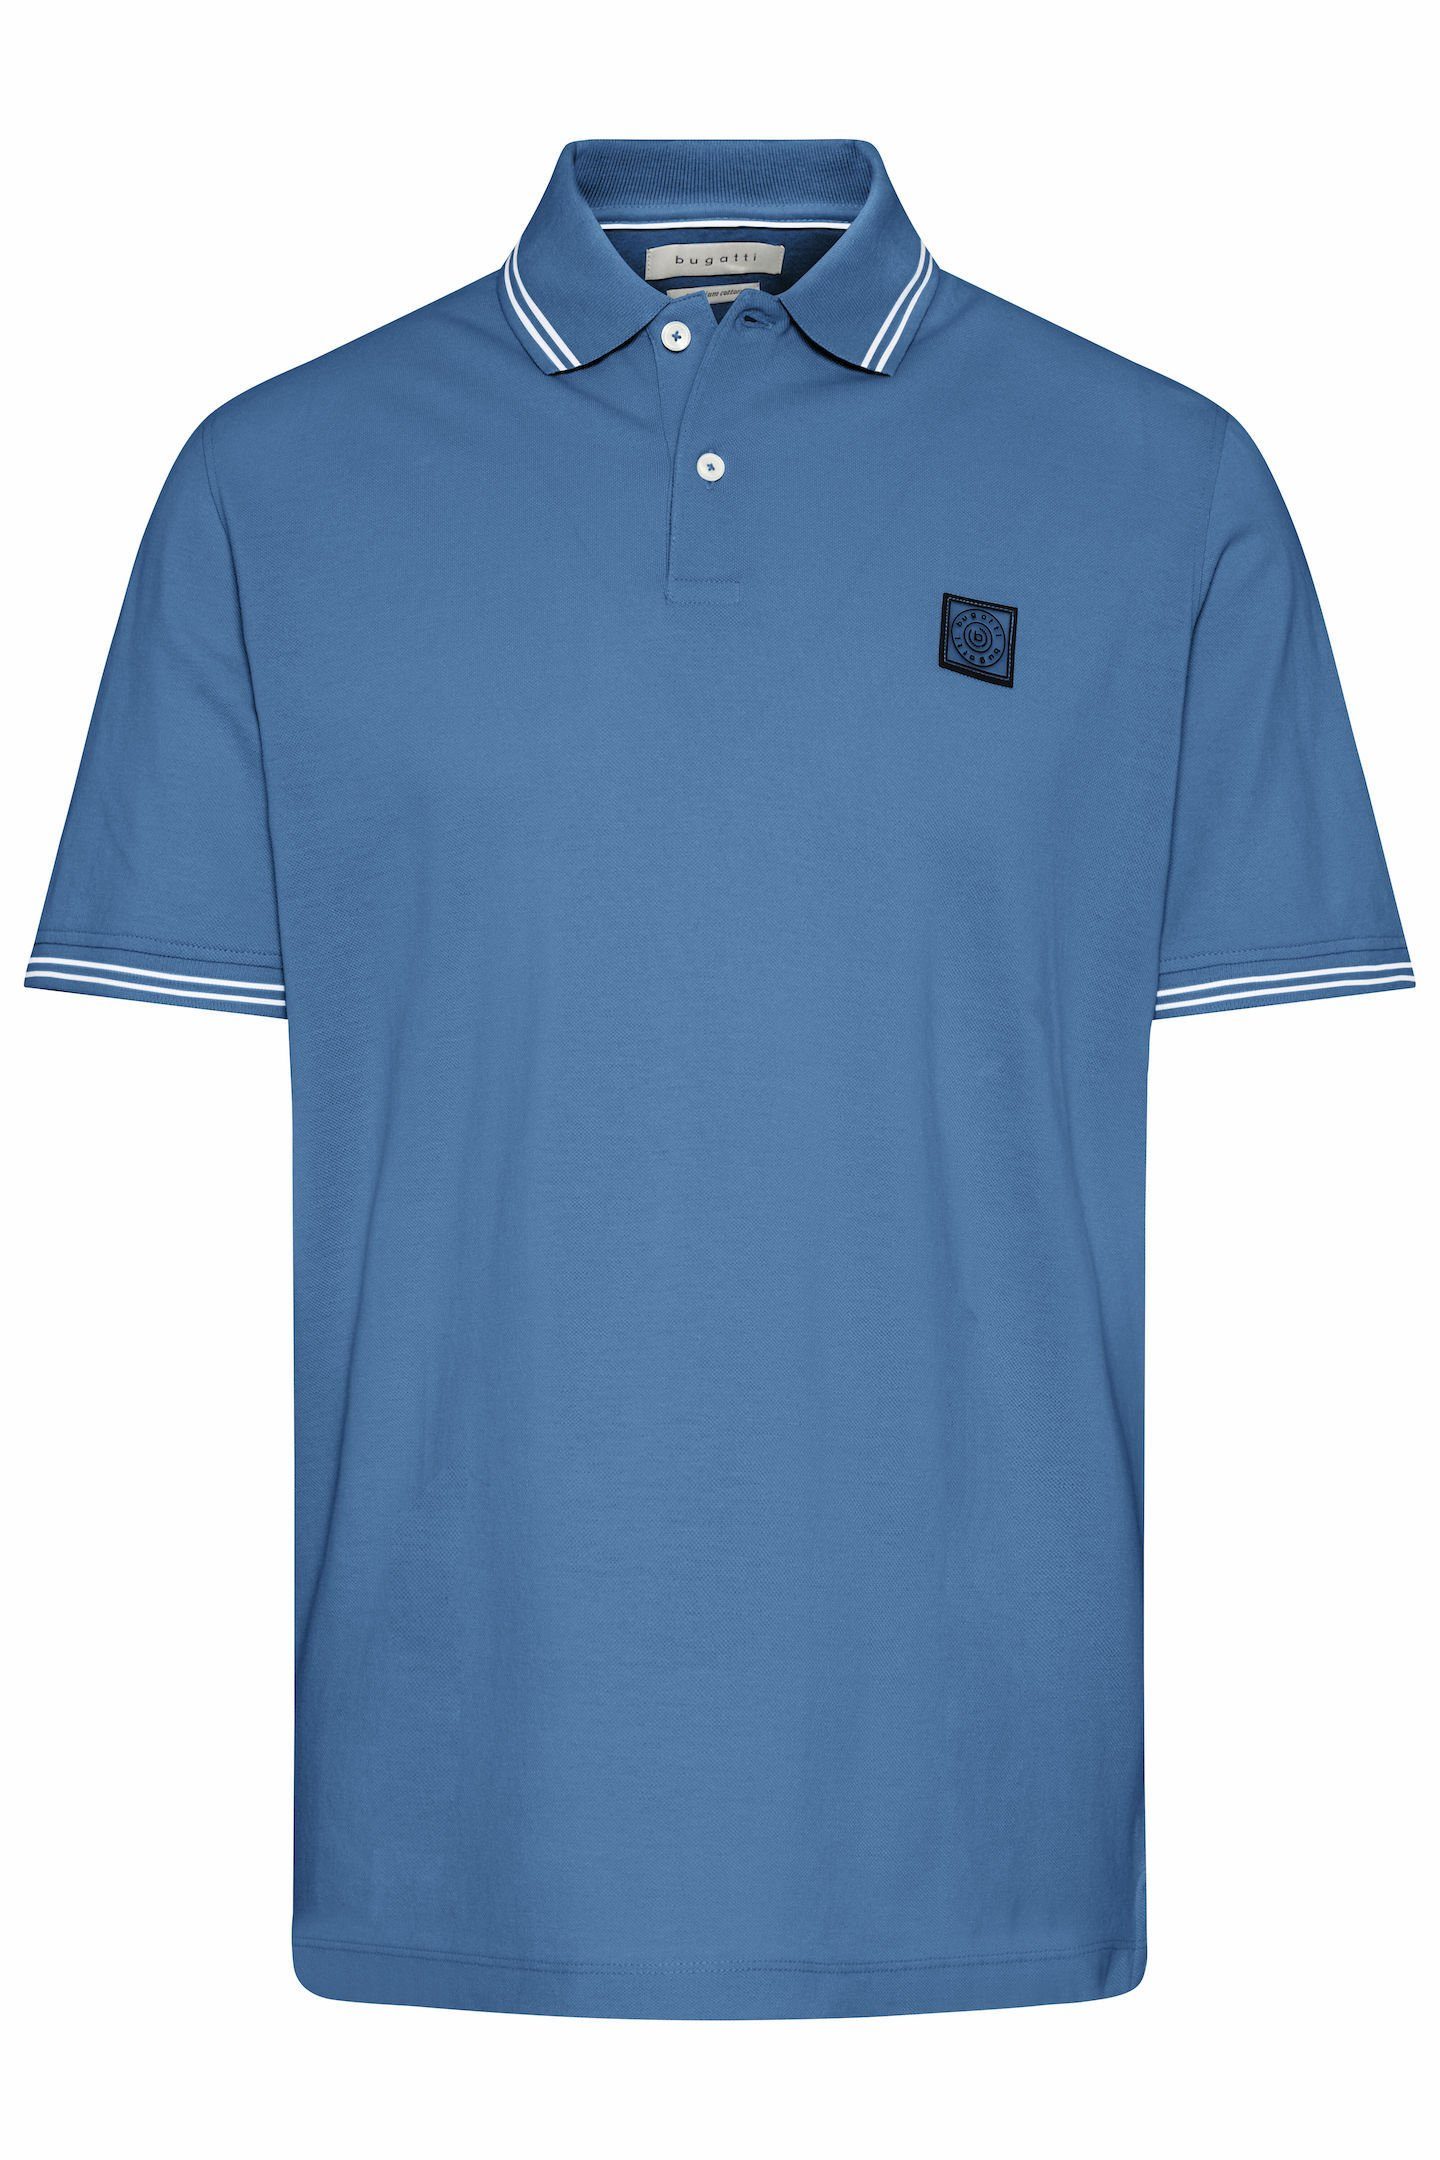 bugatti sportiven Poloshirt blau mit Kontraststreifen